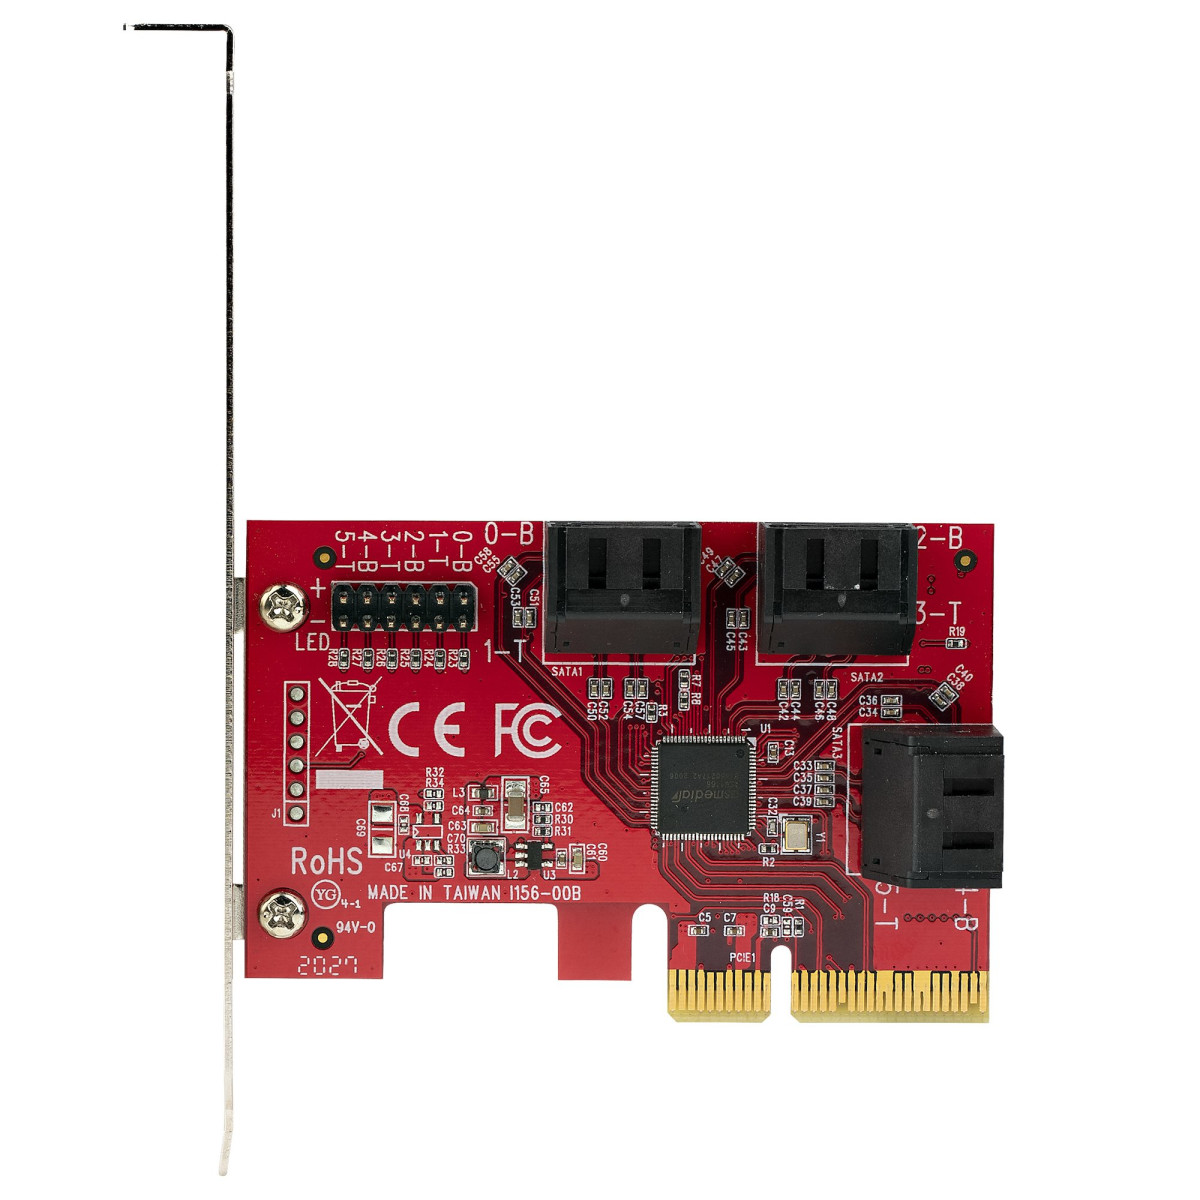 SATA PCIe Card/Controller Card 6 Ports